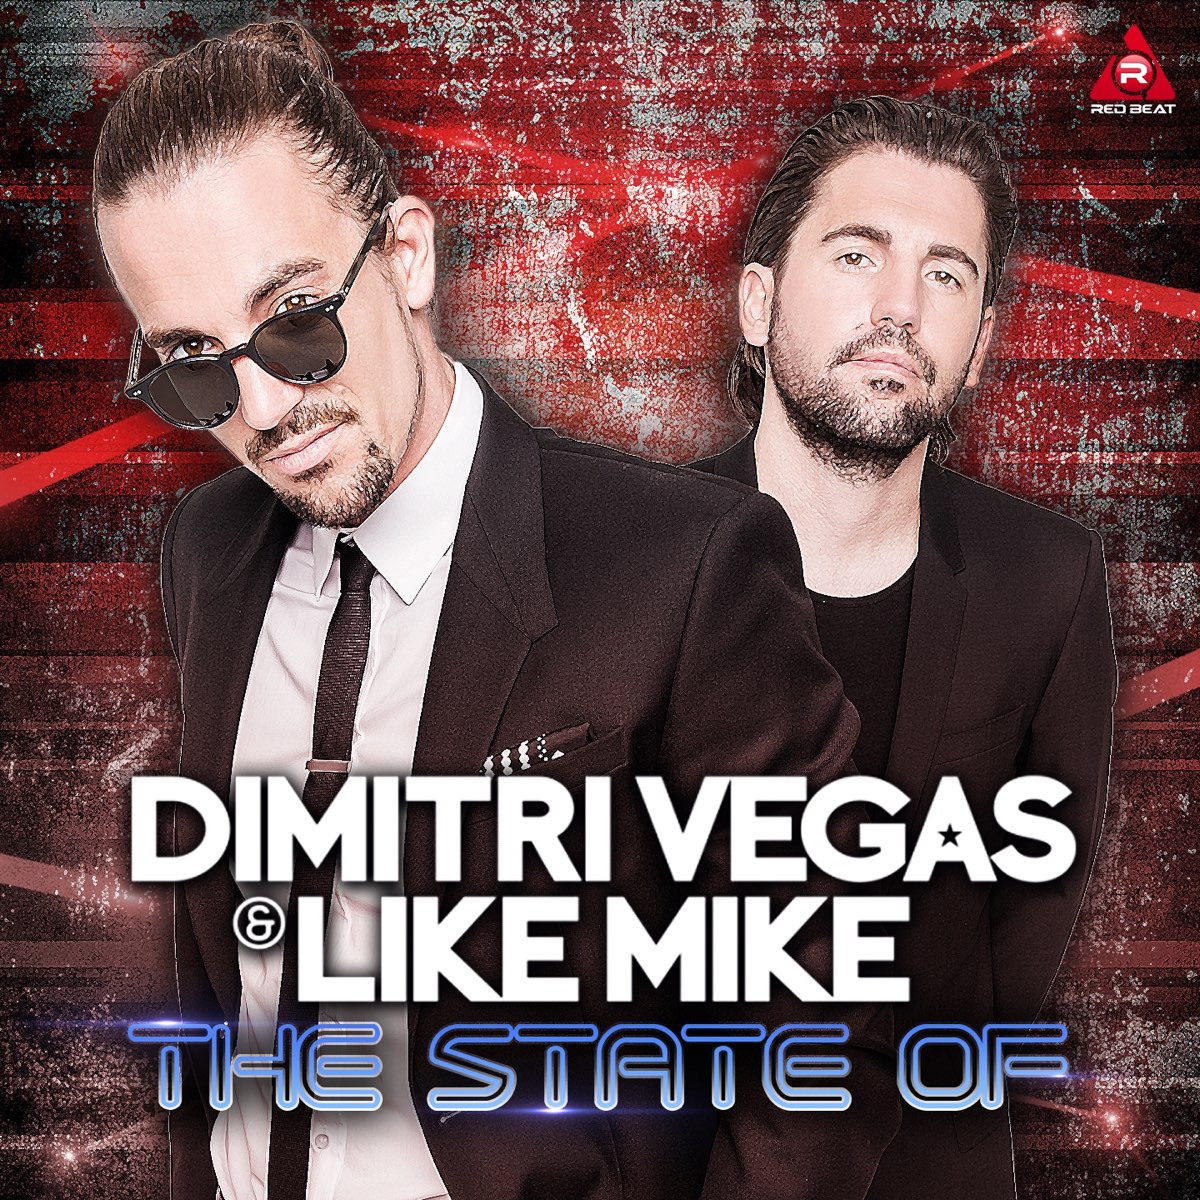 Dimitri Vegas & Like Mike Returns to the United States